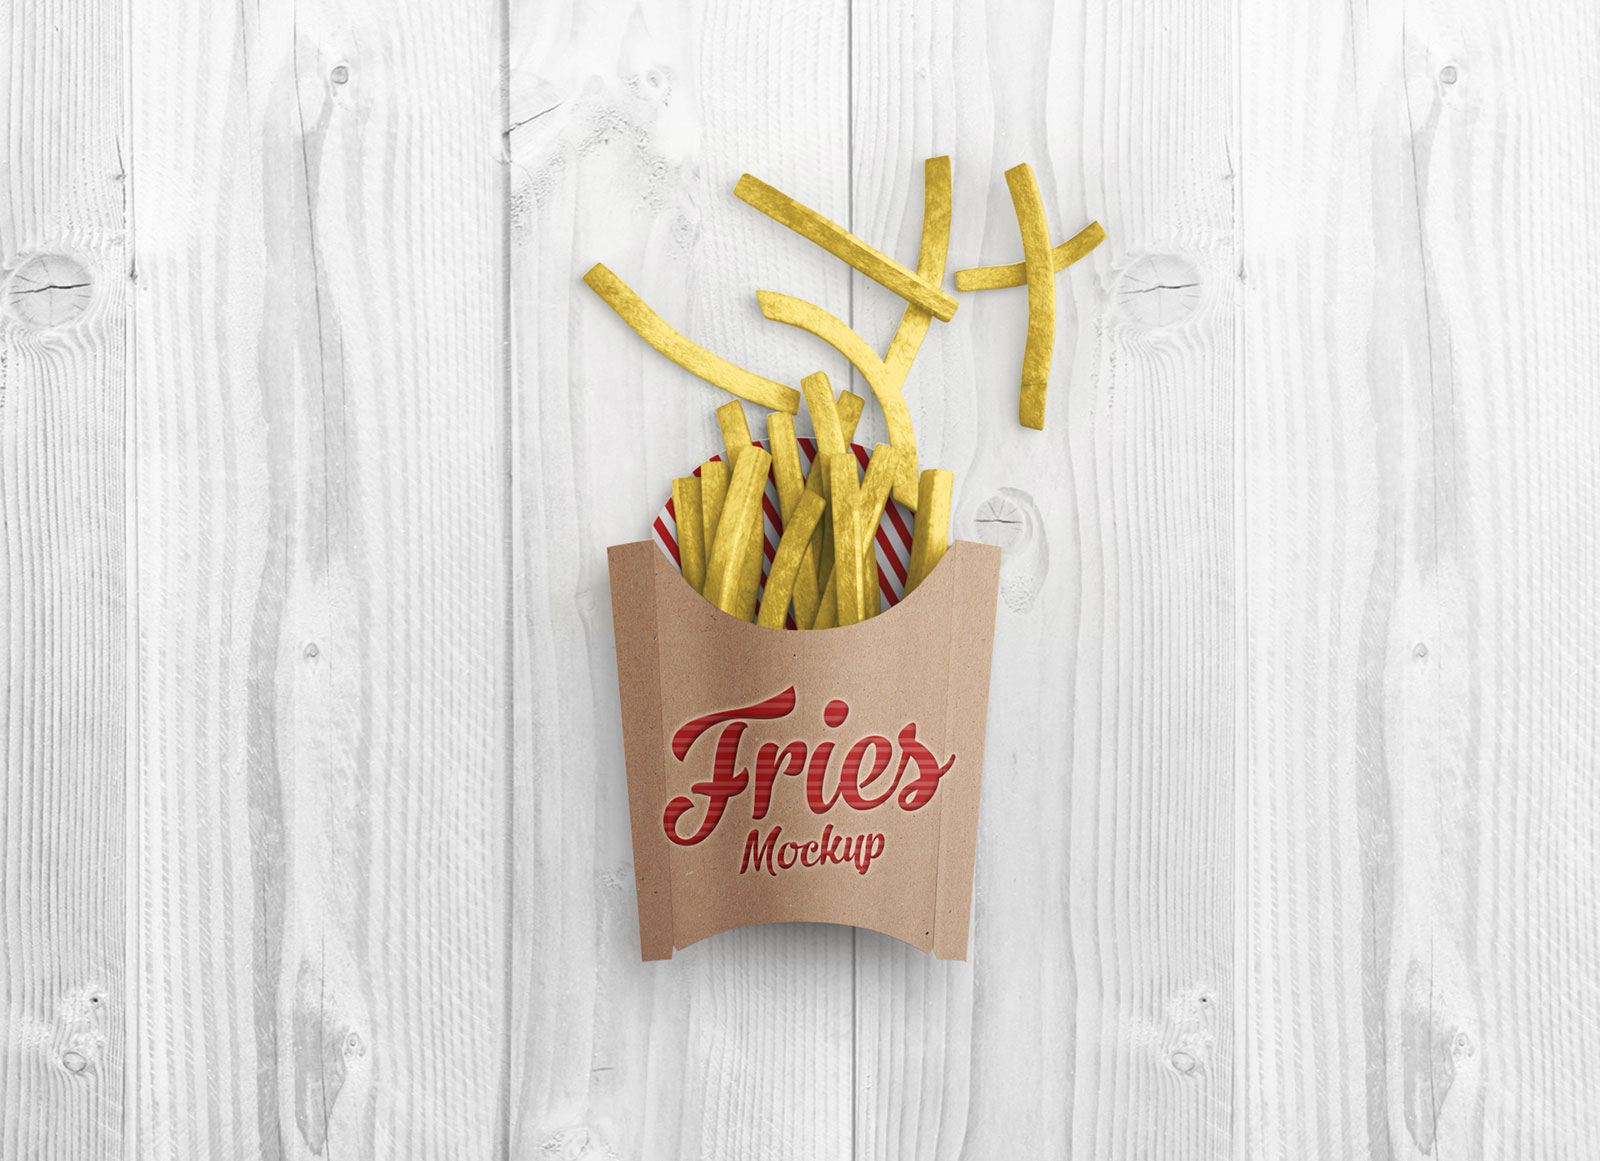 Free-Fries-Potato-Sticks-Packaging-Box-Mockup-PSD